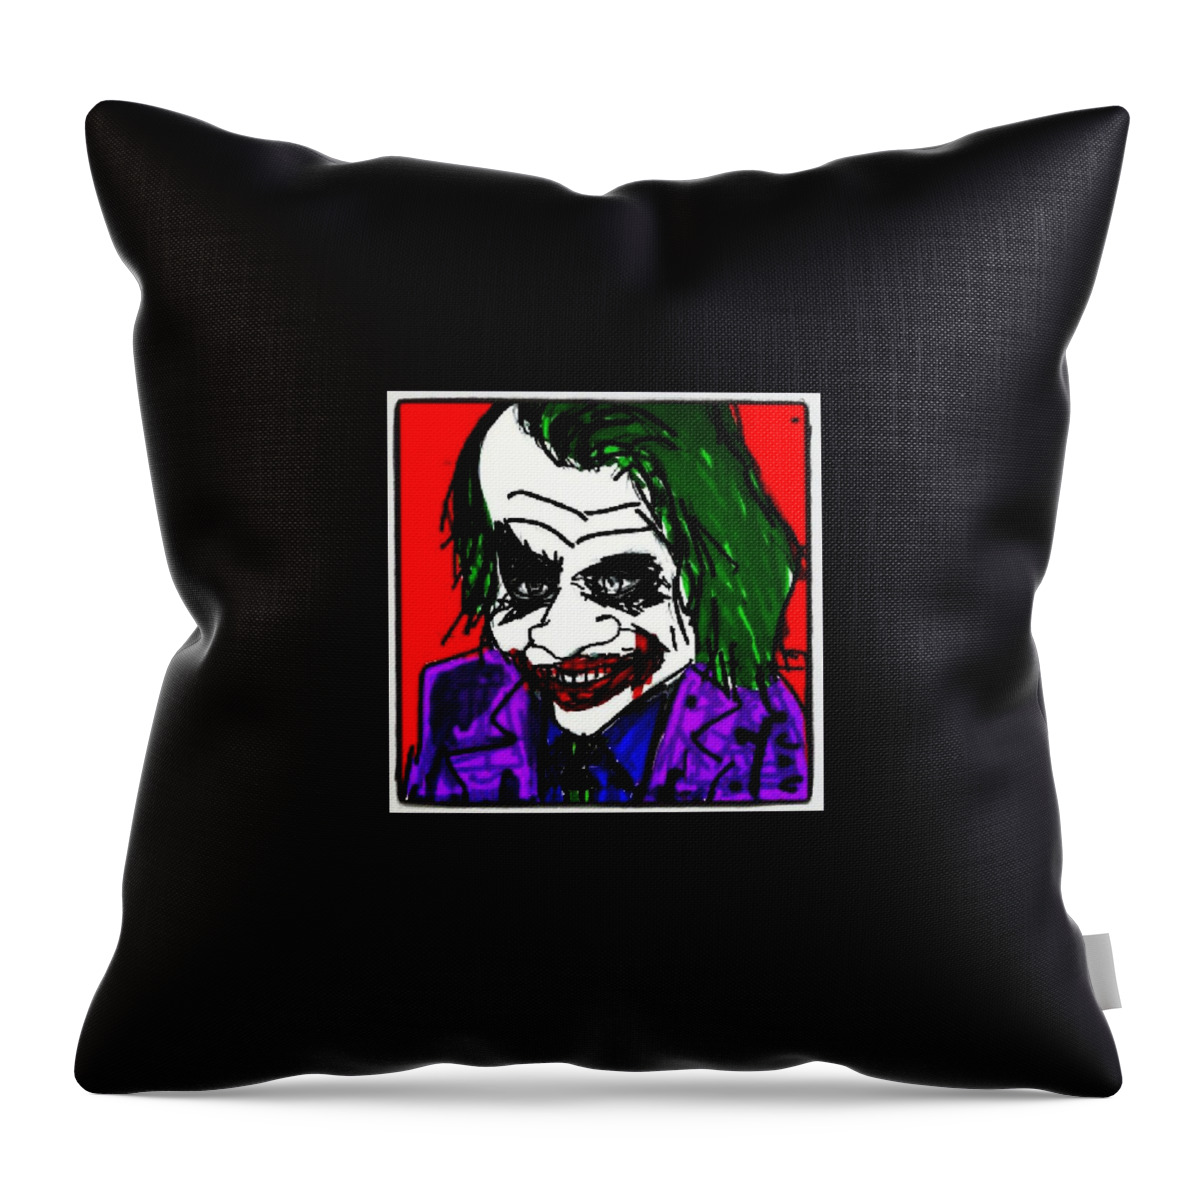 Joker Throw Pillow featuring the photograph Joker by Nuno Marques